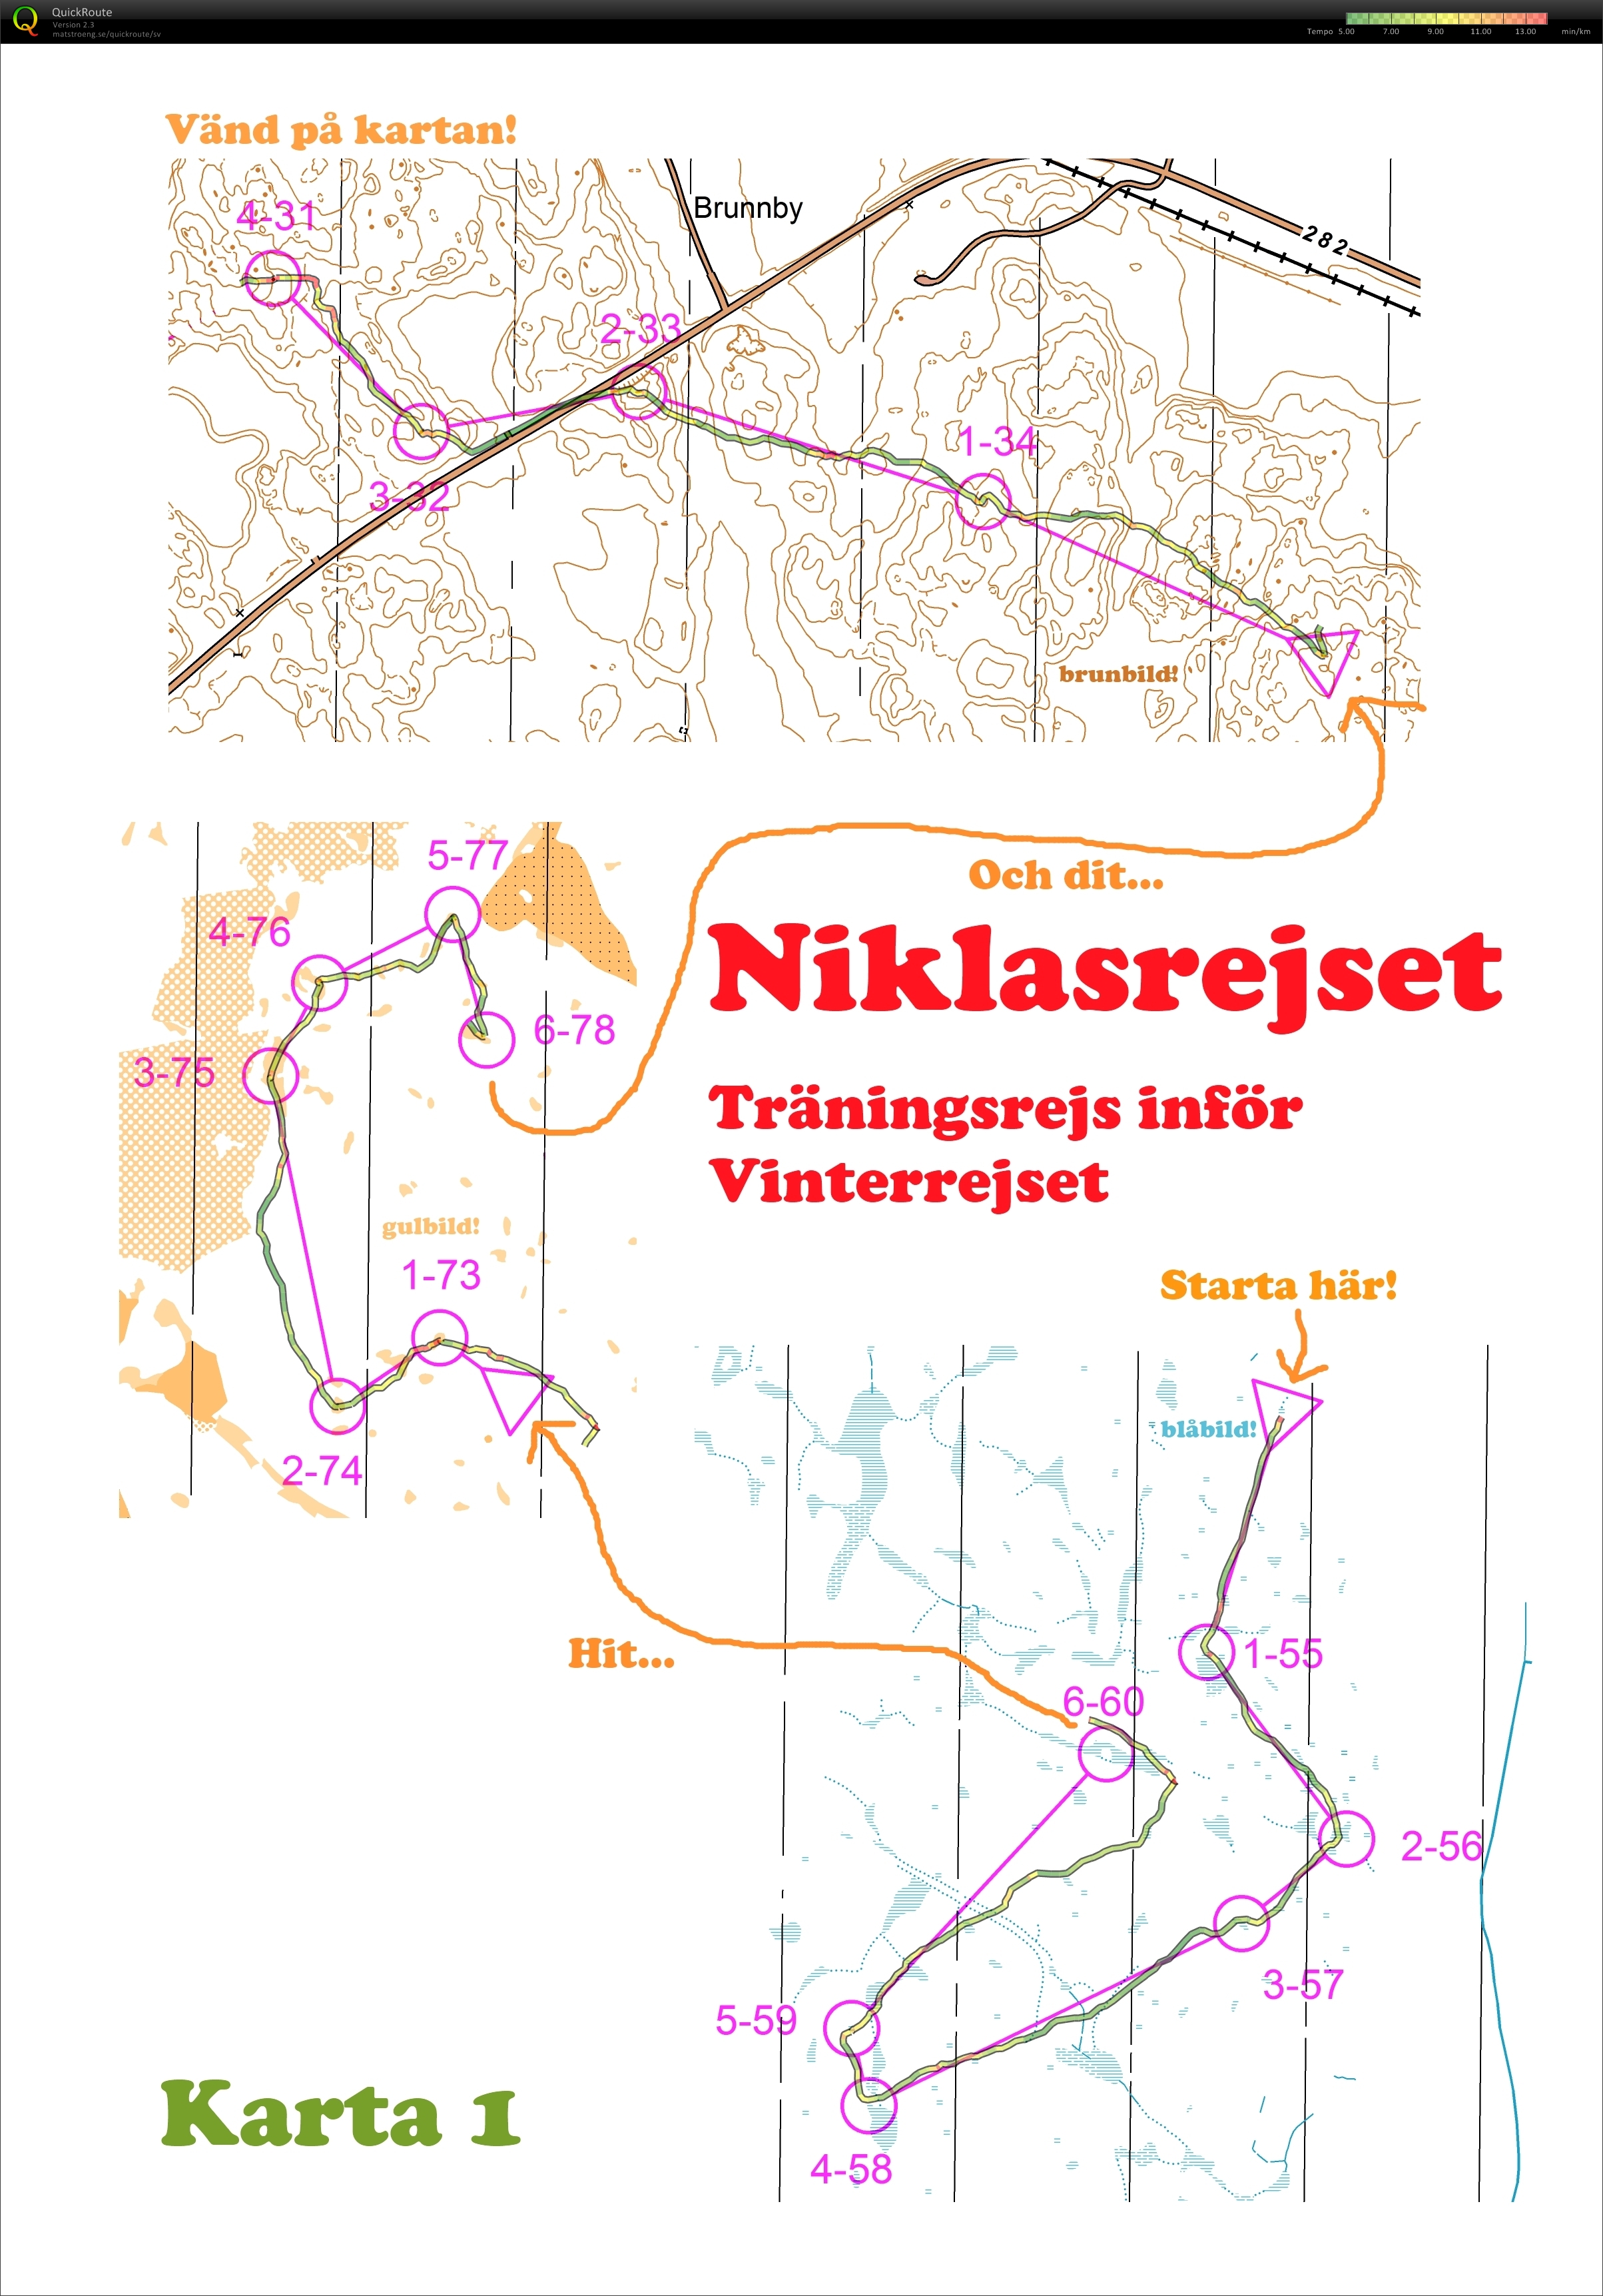 Niklasrejset - karta 1 (05-08-2011)